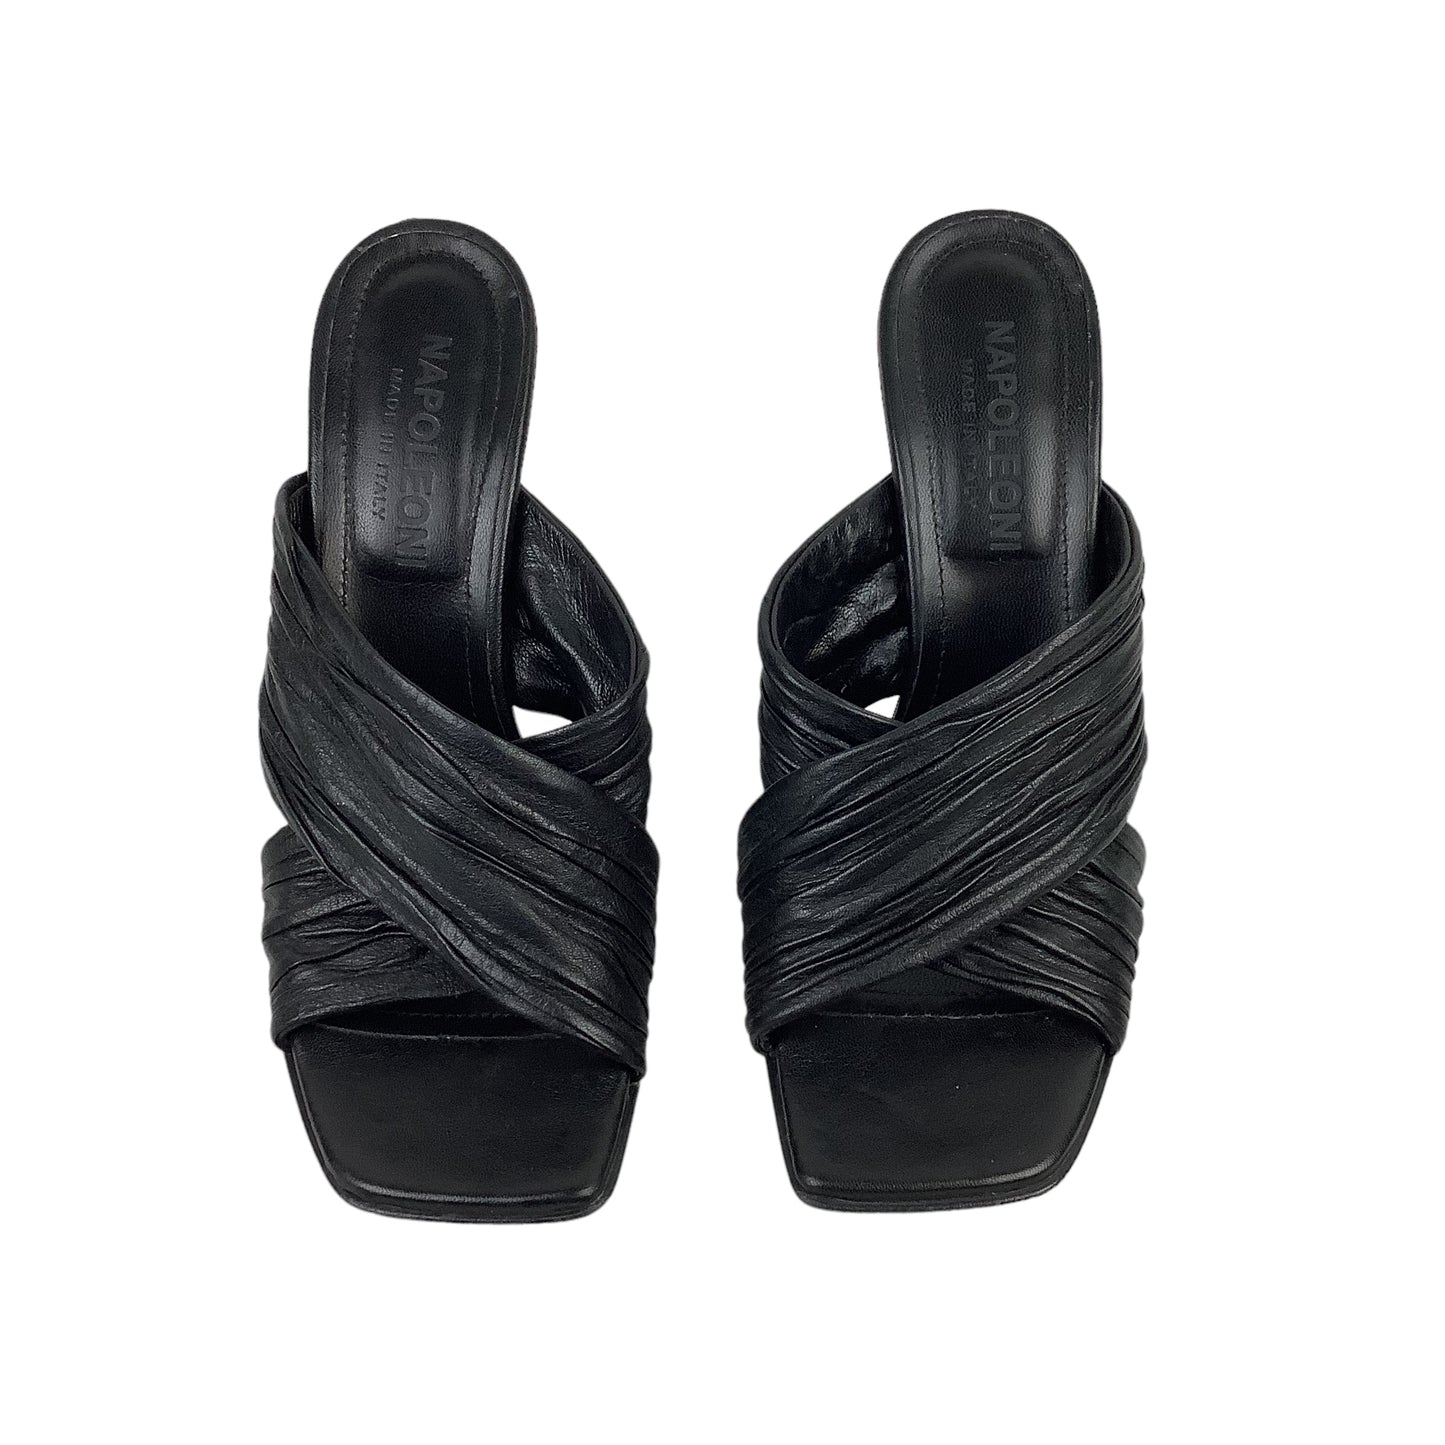 Sandals Heels Stiletto By Cmc  Size: 9